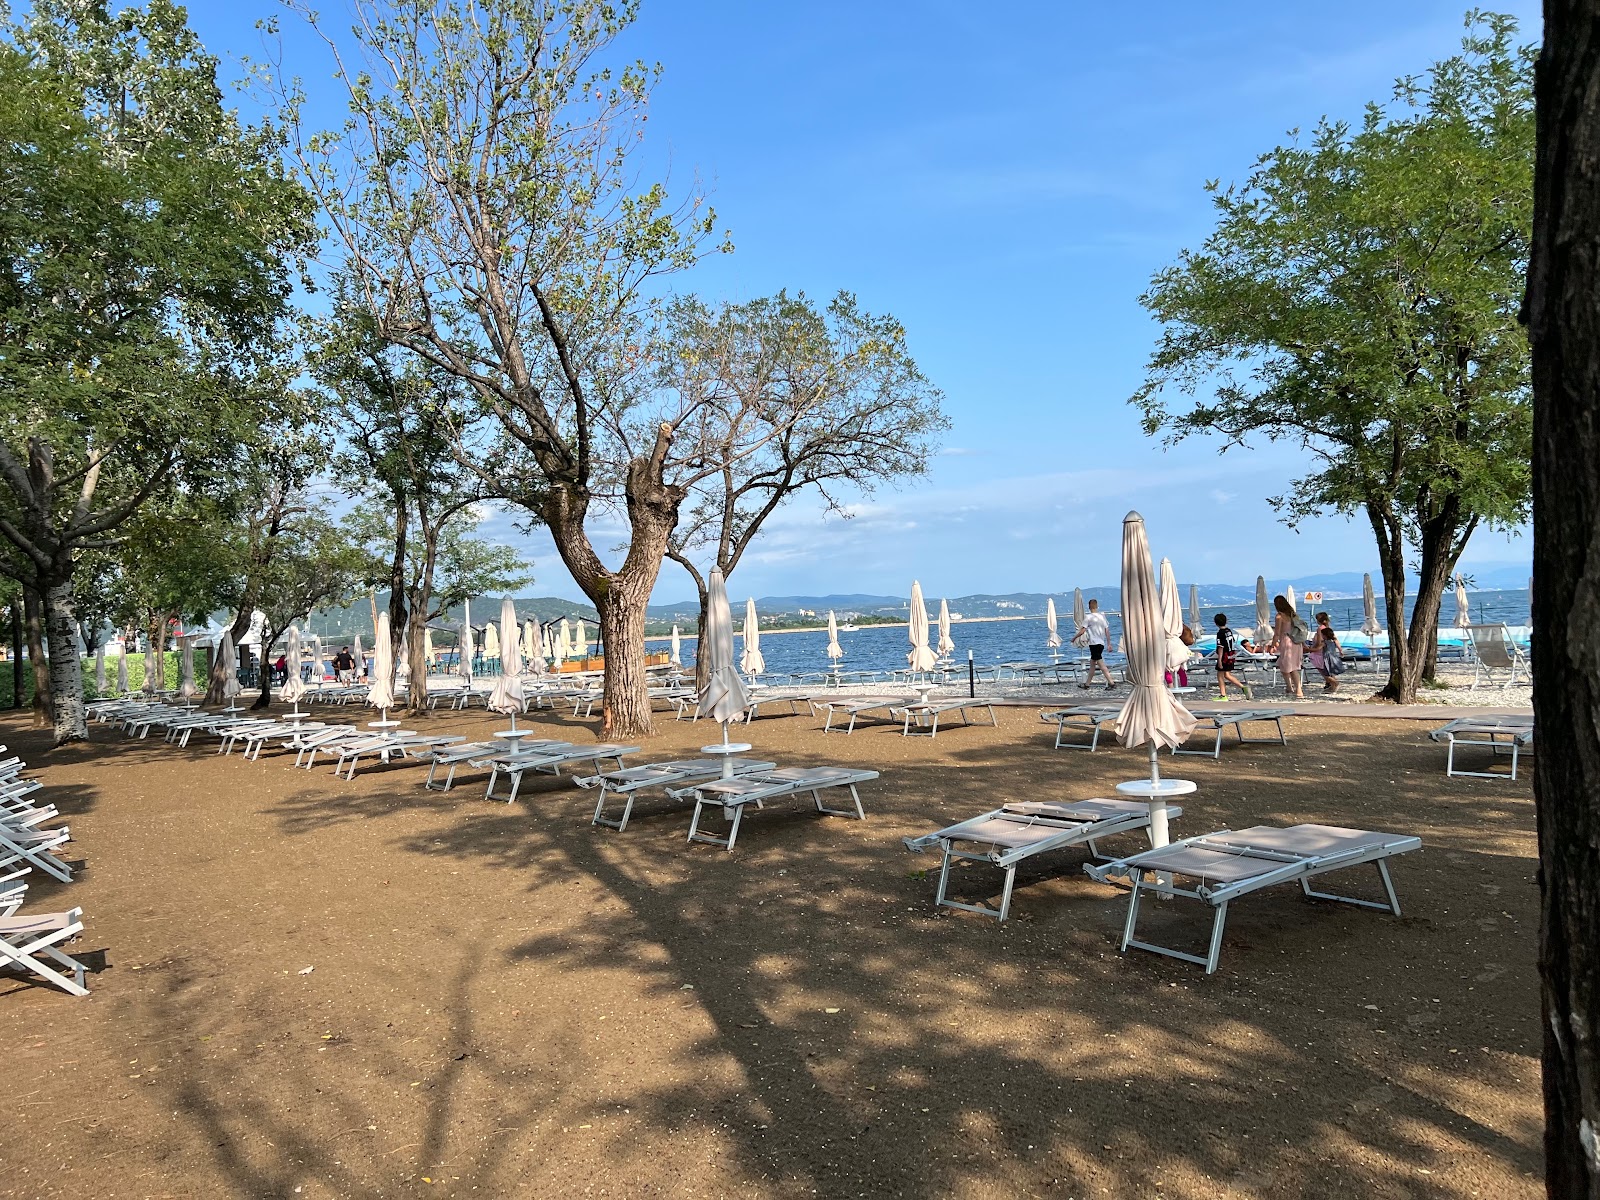 Photo of Spiaggia Monfalcone beach resort area